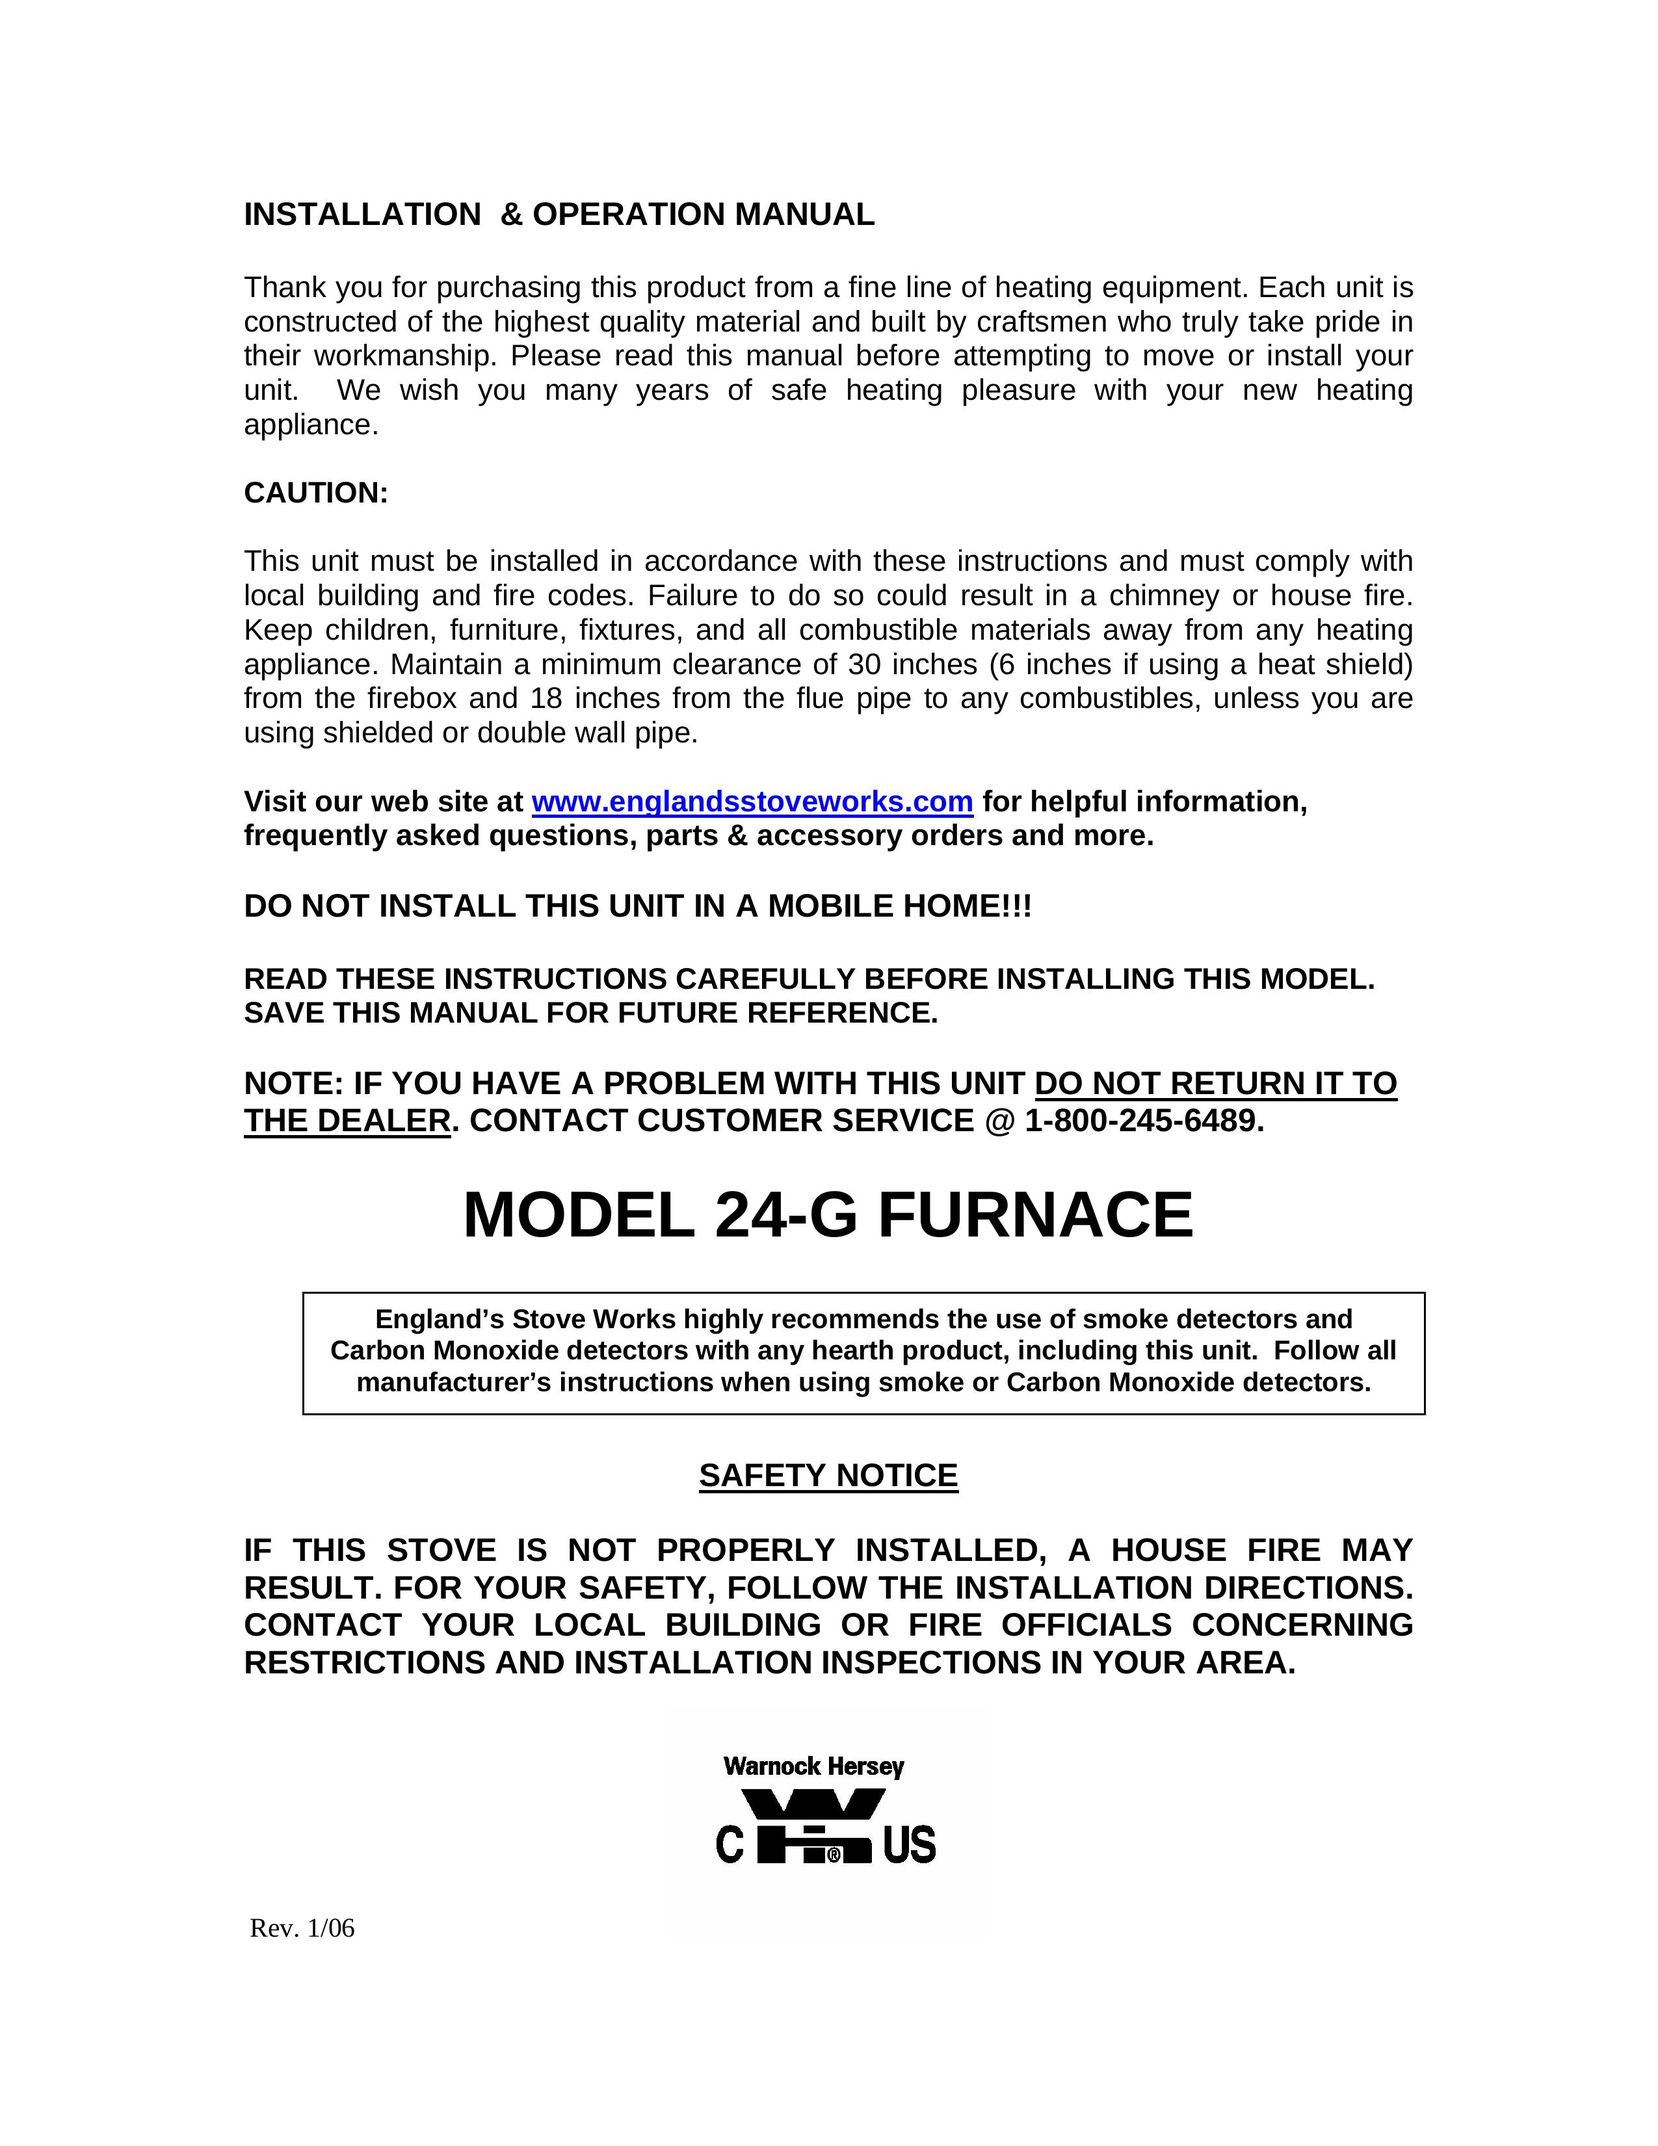 England's Stove Works 24-G Furnace User Manual